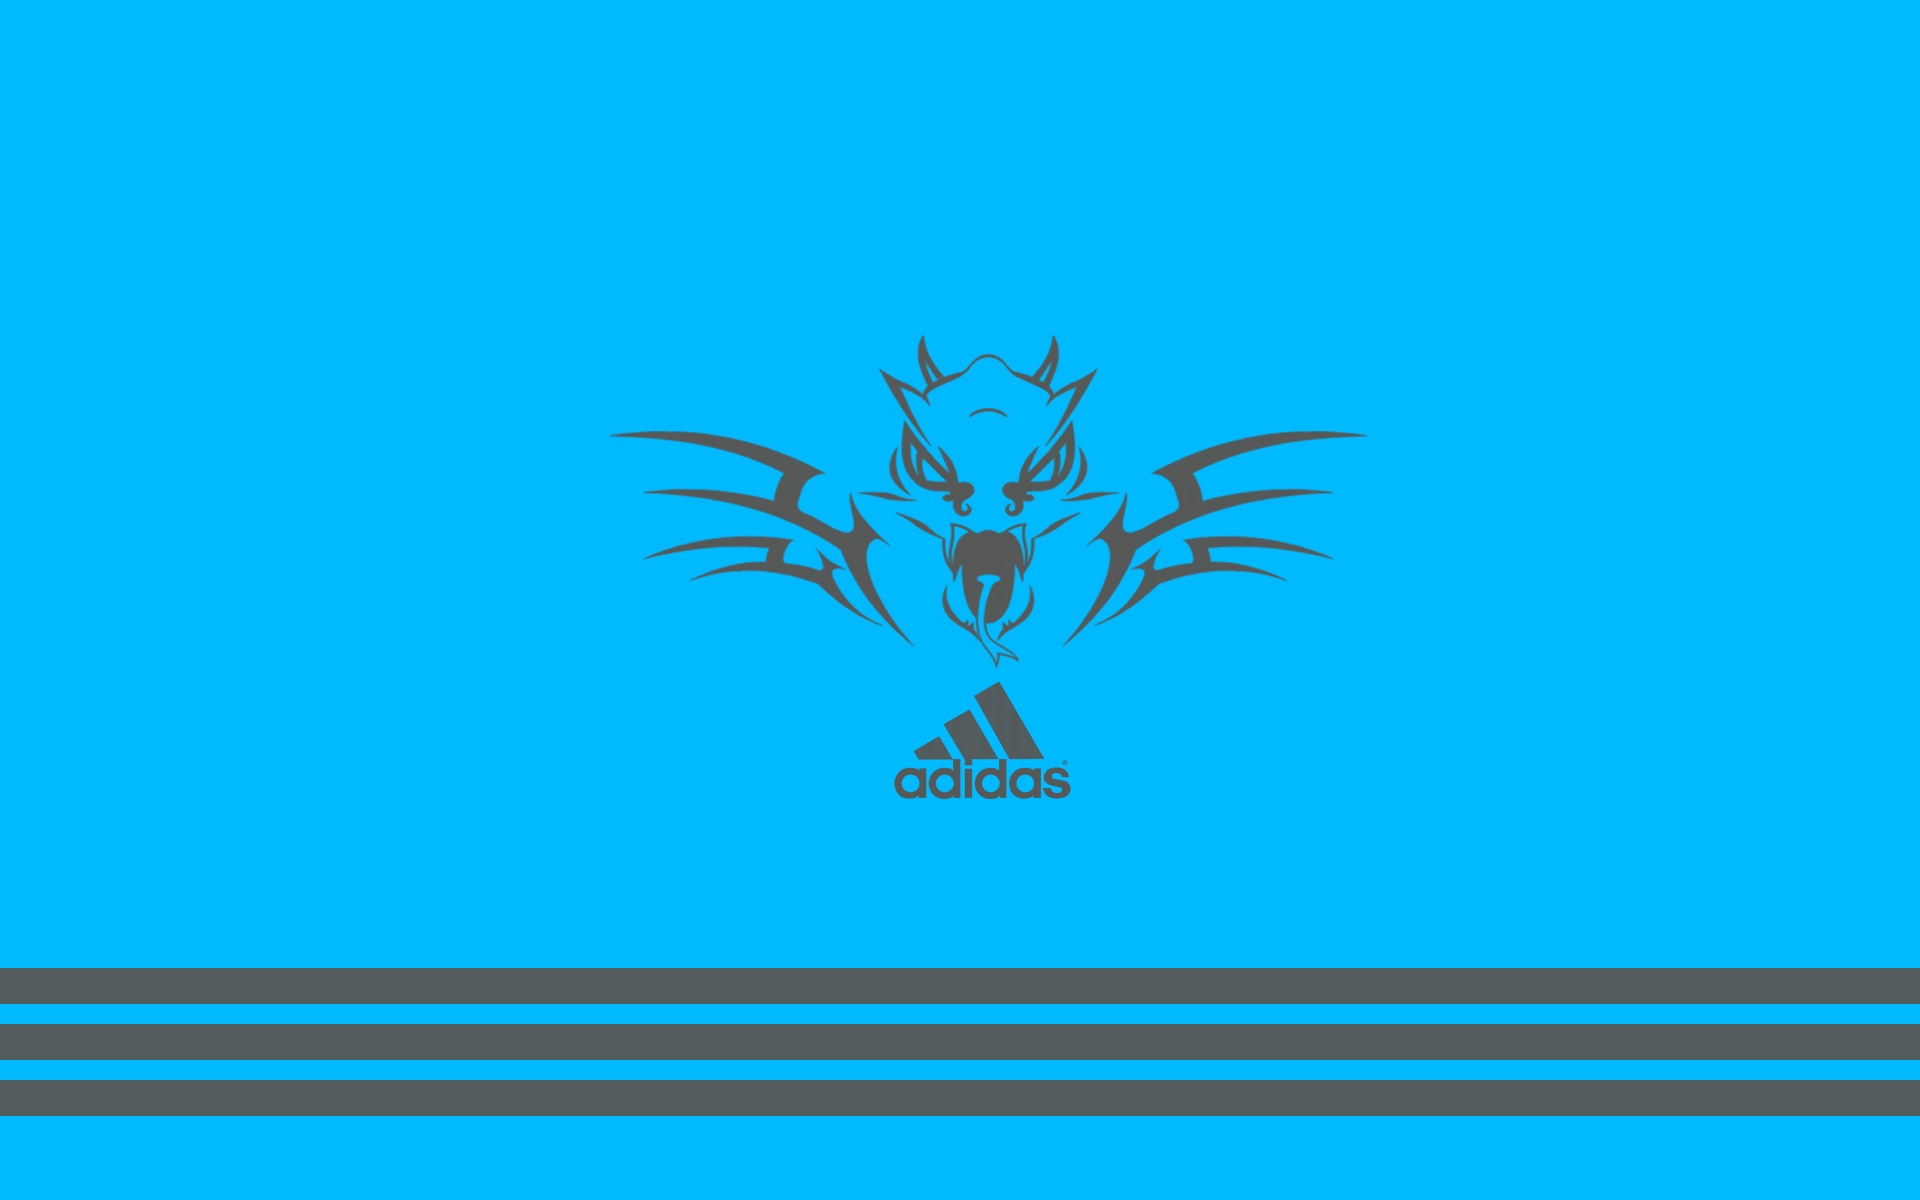 Adidas Fantasy Logo for 1920 x 1200 widescreen resolution